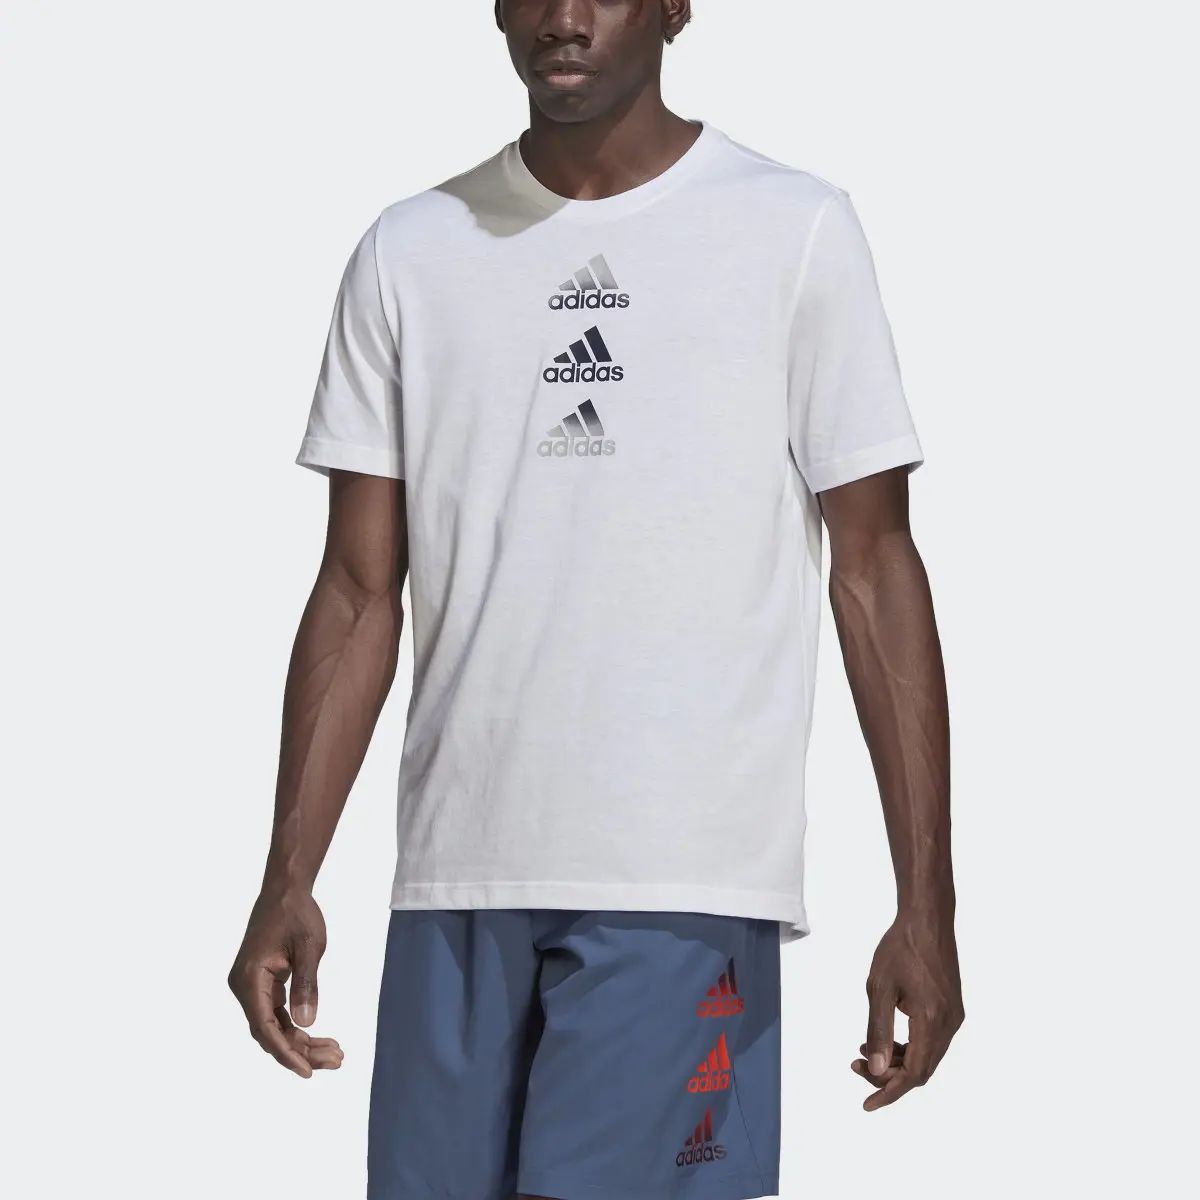 Adidas T-shirt Designed to Move. 1